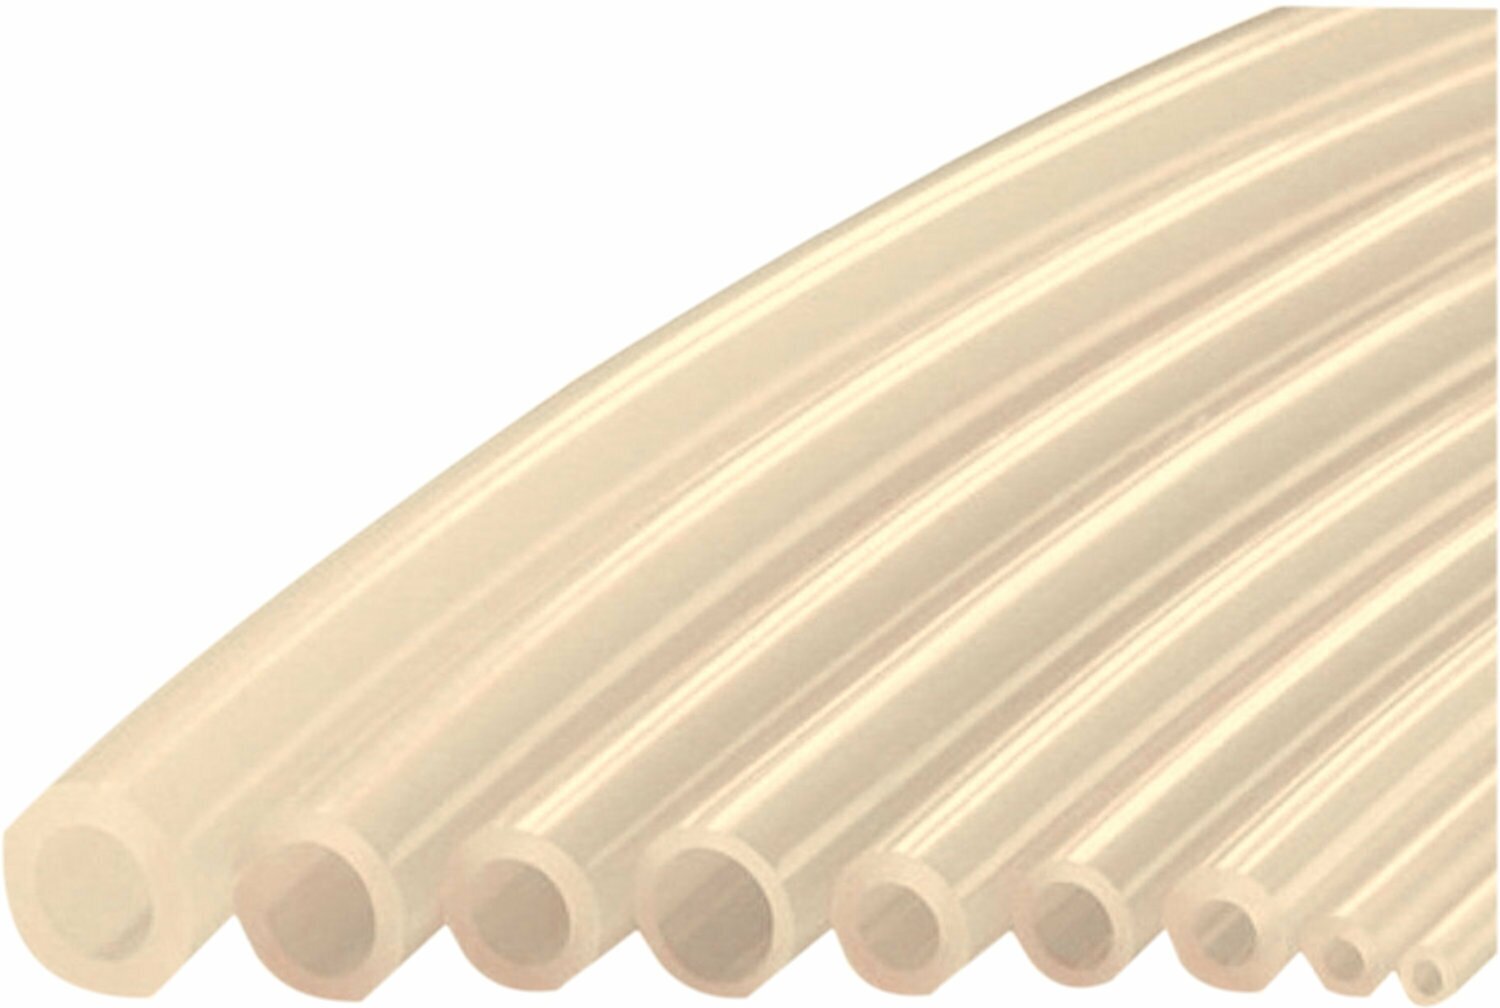 Трубка силиконовая 10,0*1,0 (10 мм внутренний диаметр, 1 мм стенка), длина 1 метр